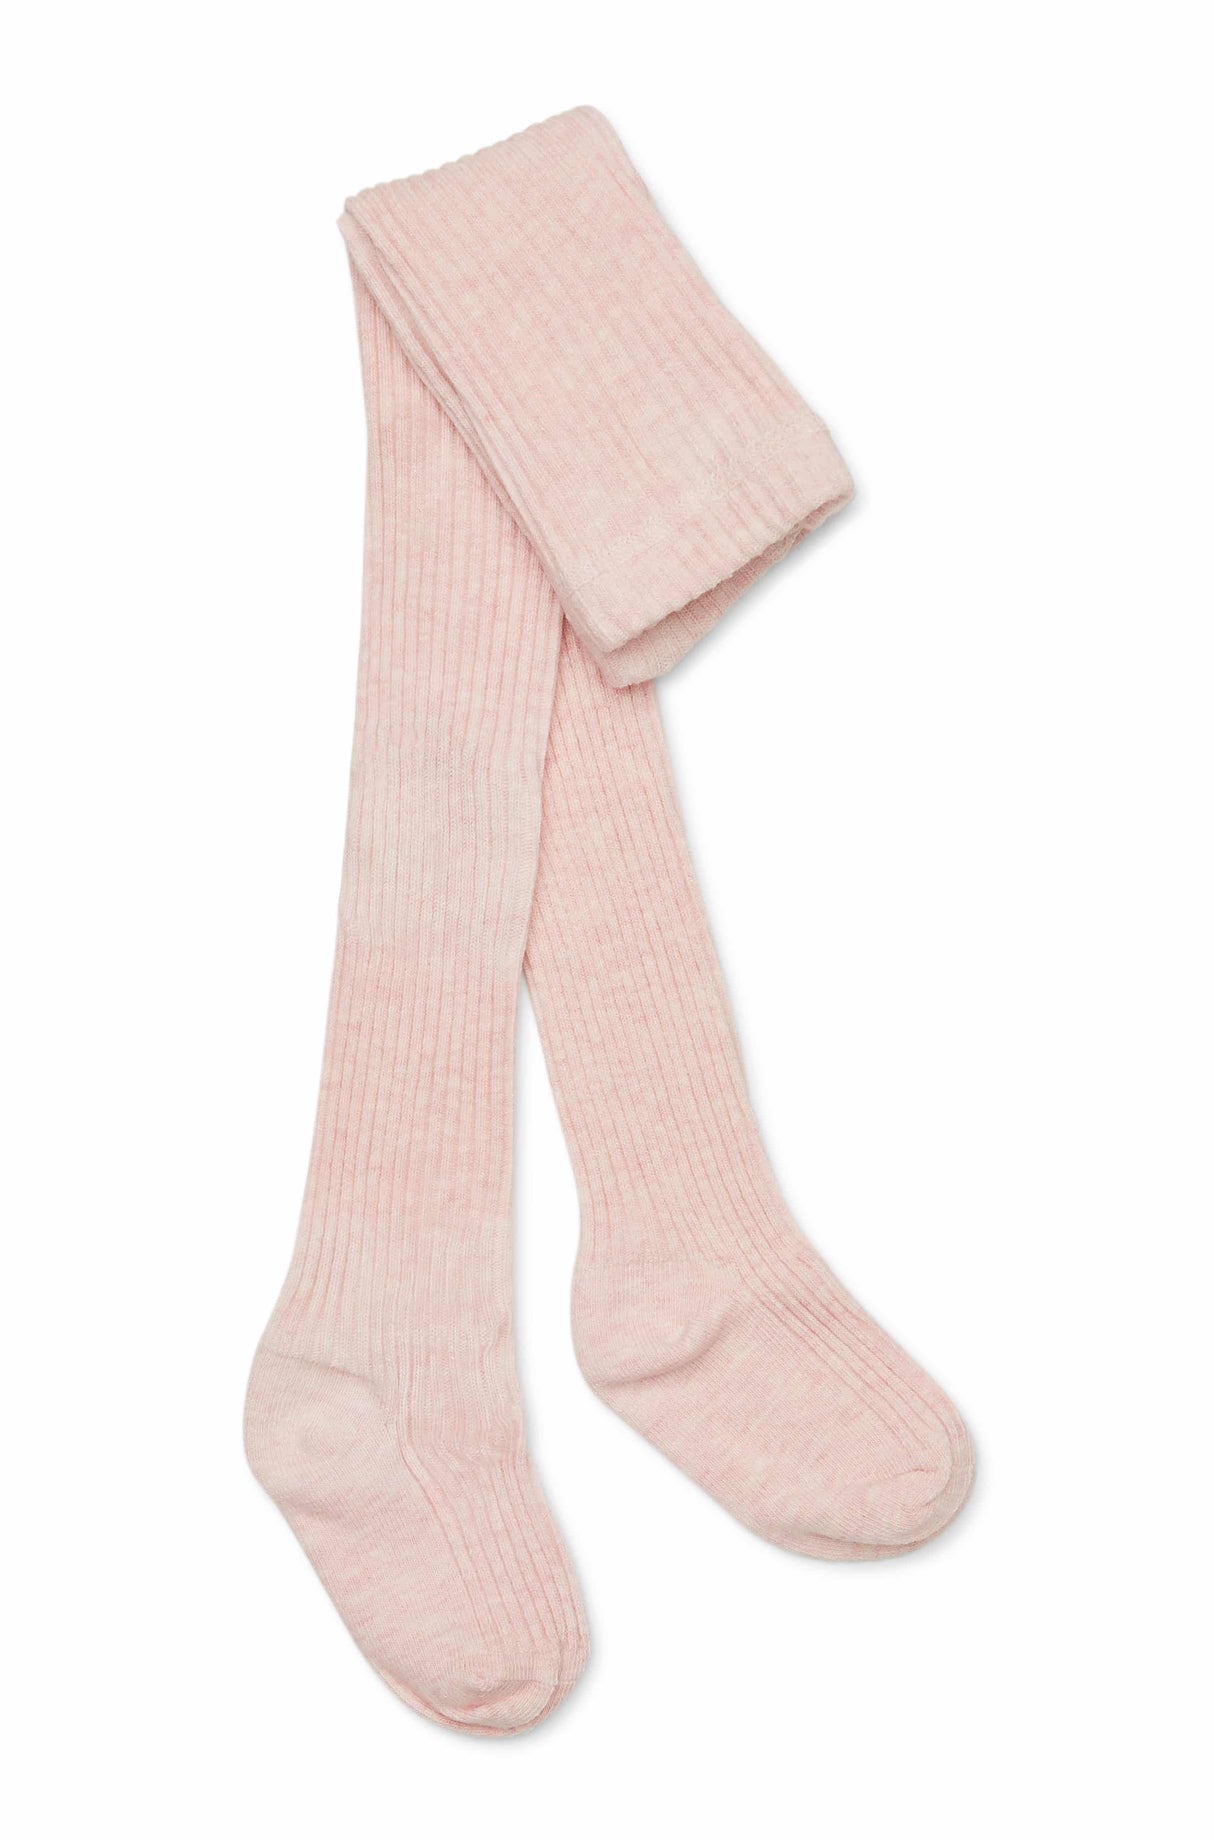 Wool beigey pink socks